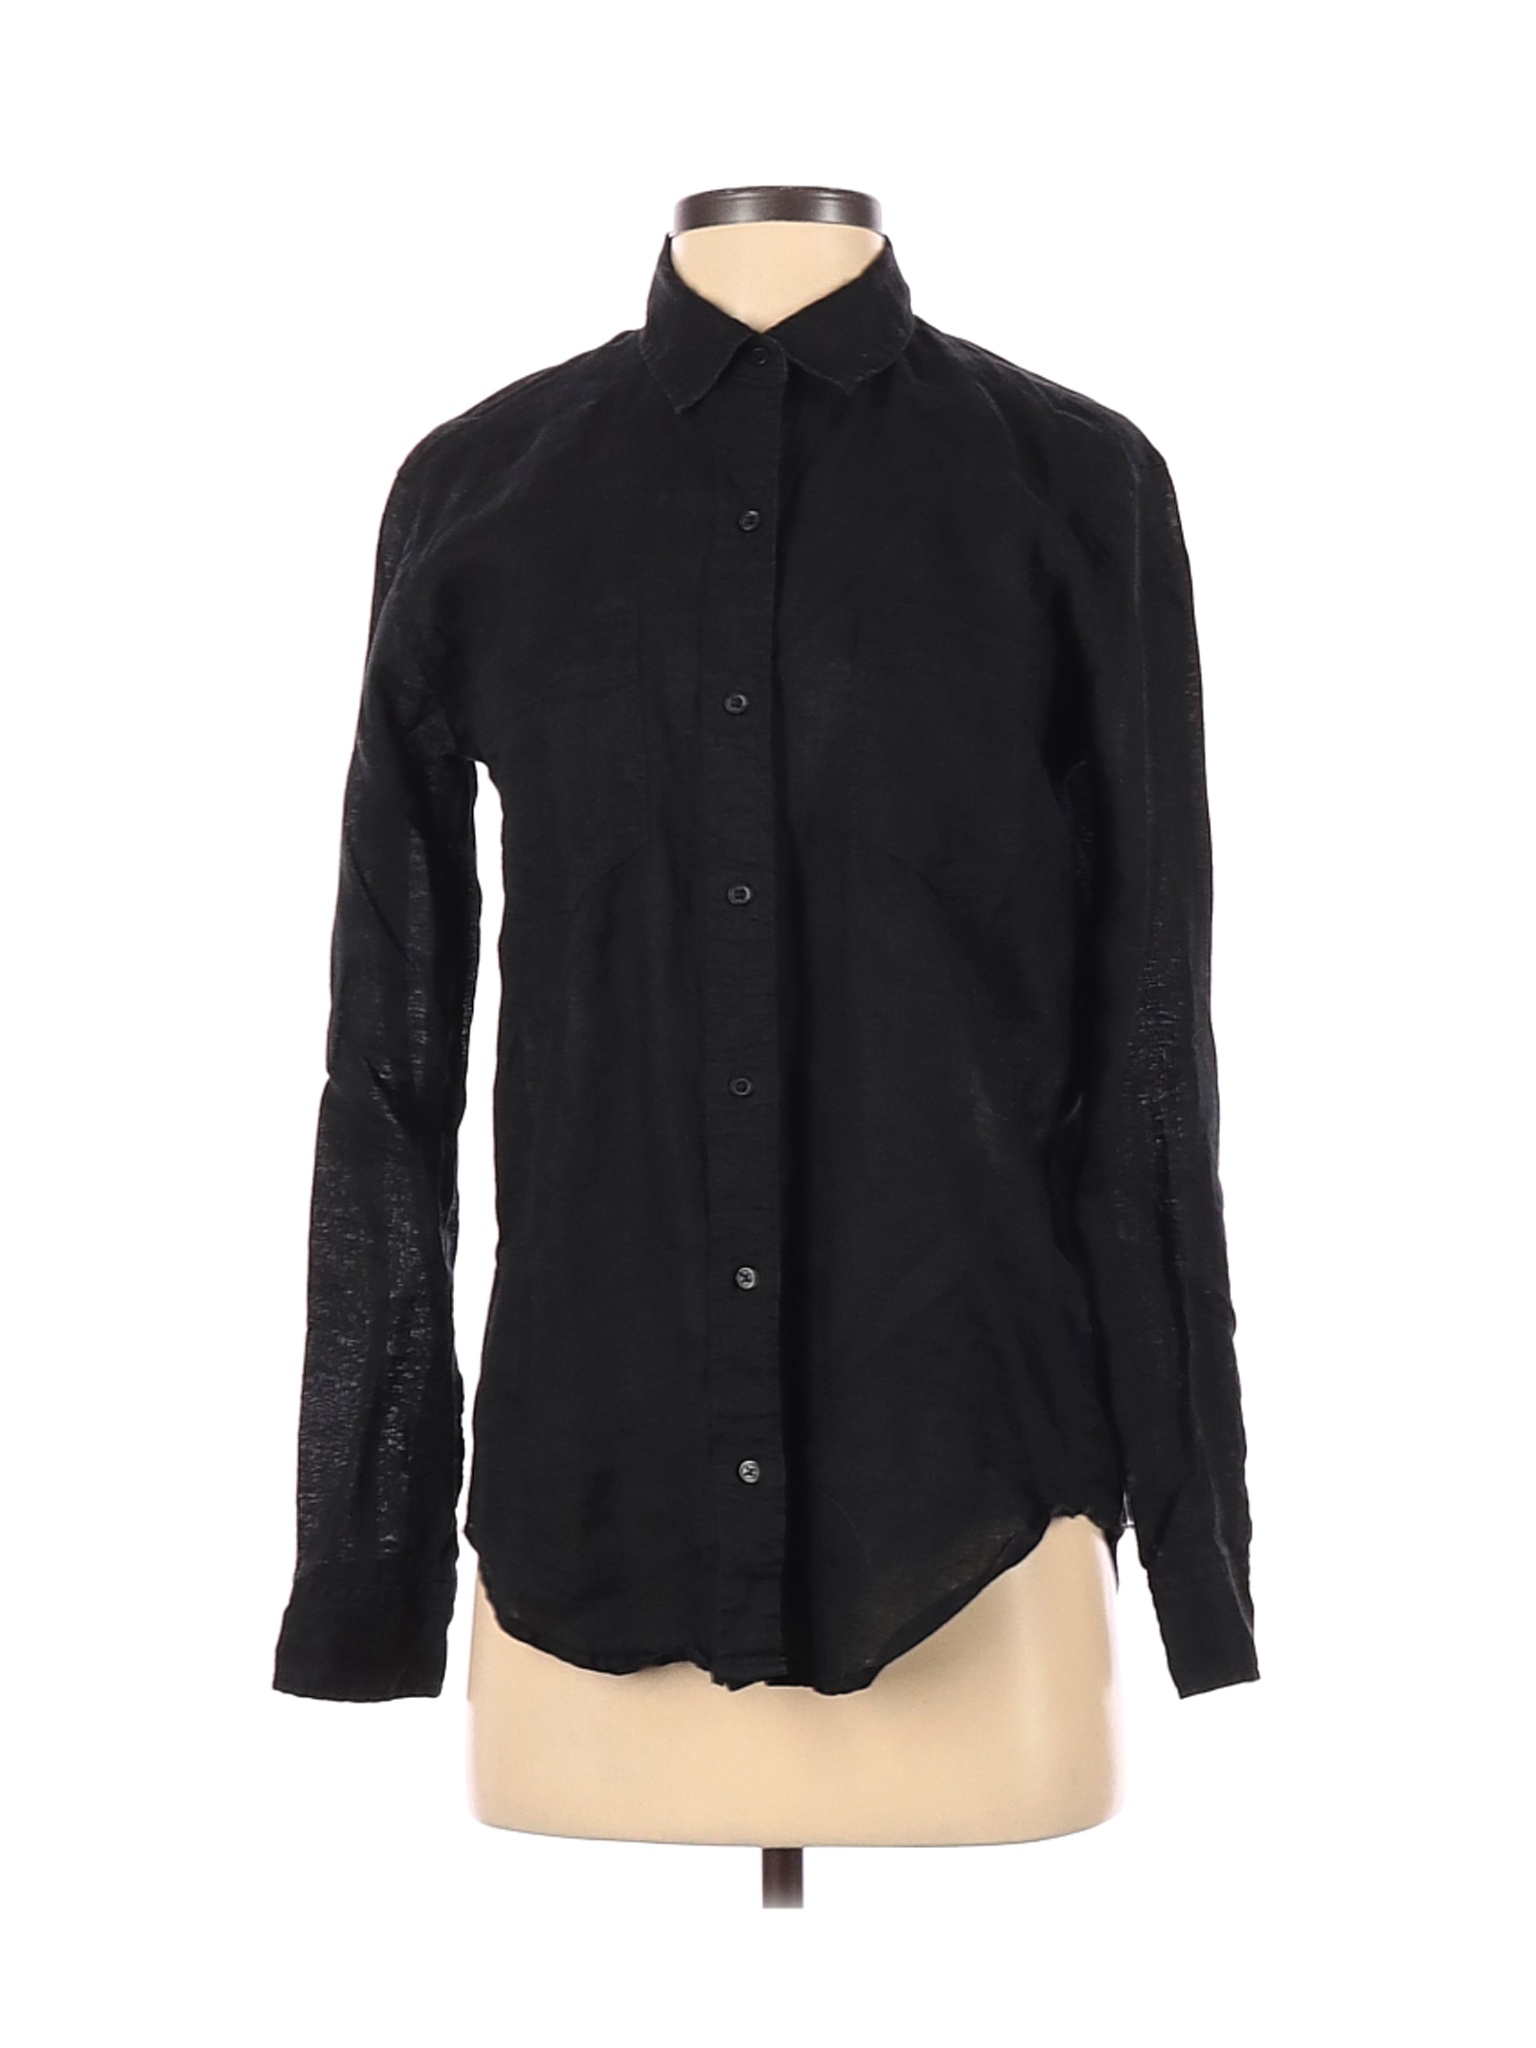 Gap Women Black Long Sleeve Button-Down Shirt XS | eBay